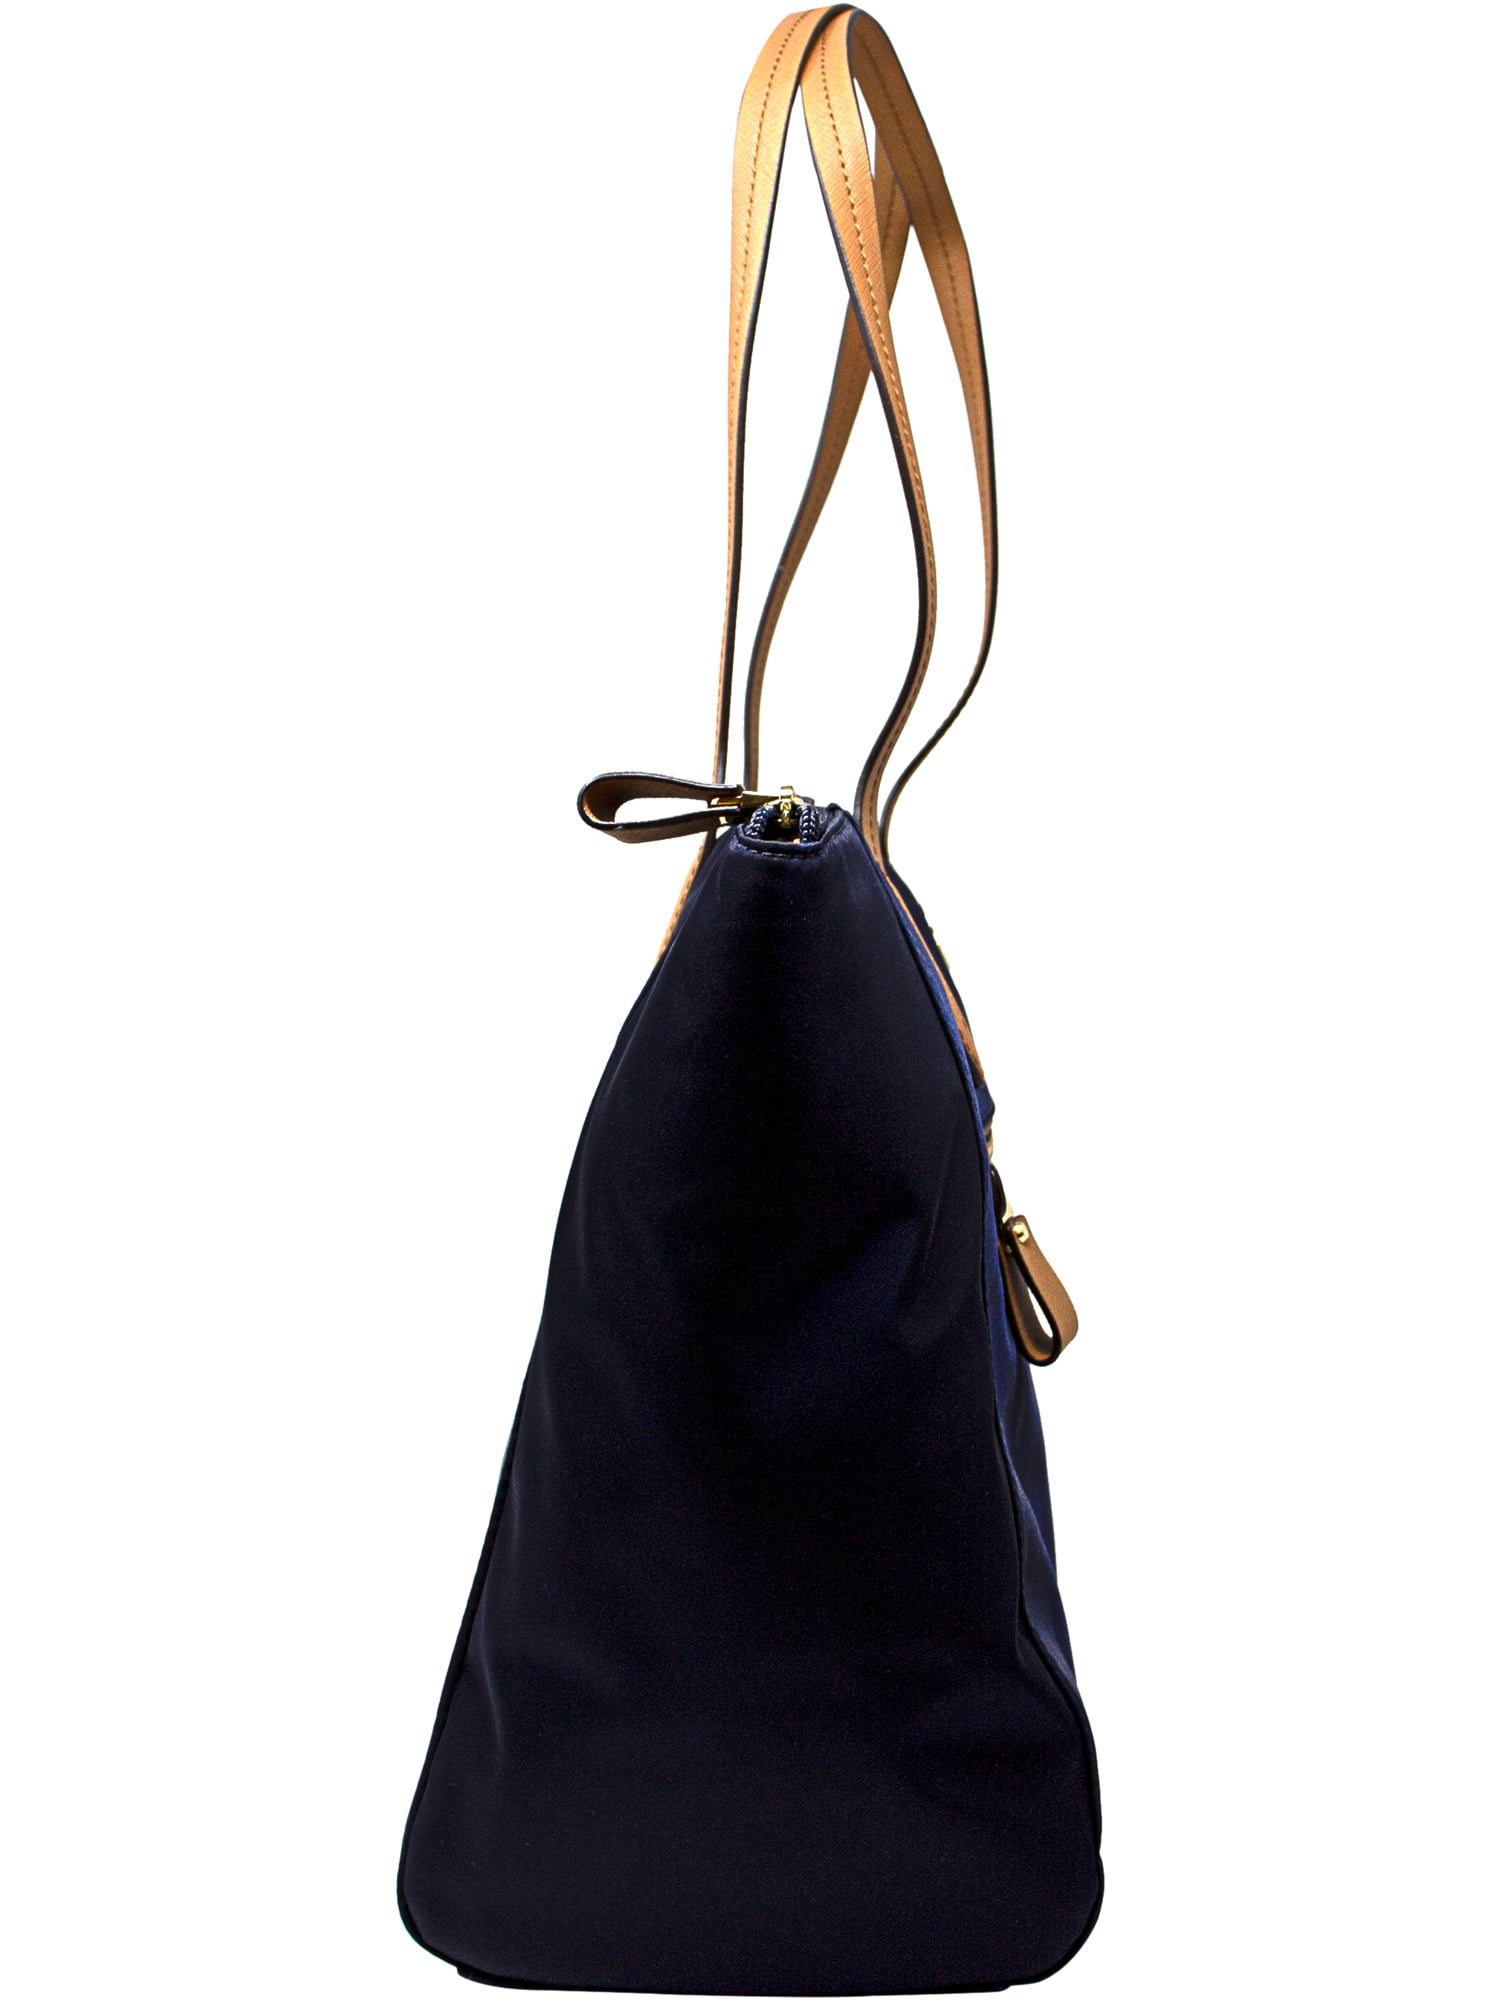 Michael Kors Nylon Kelsey Large Backpack, Handbags